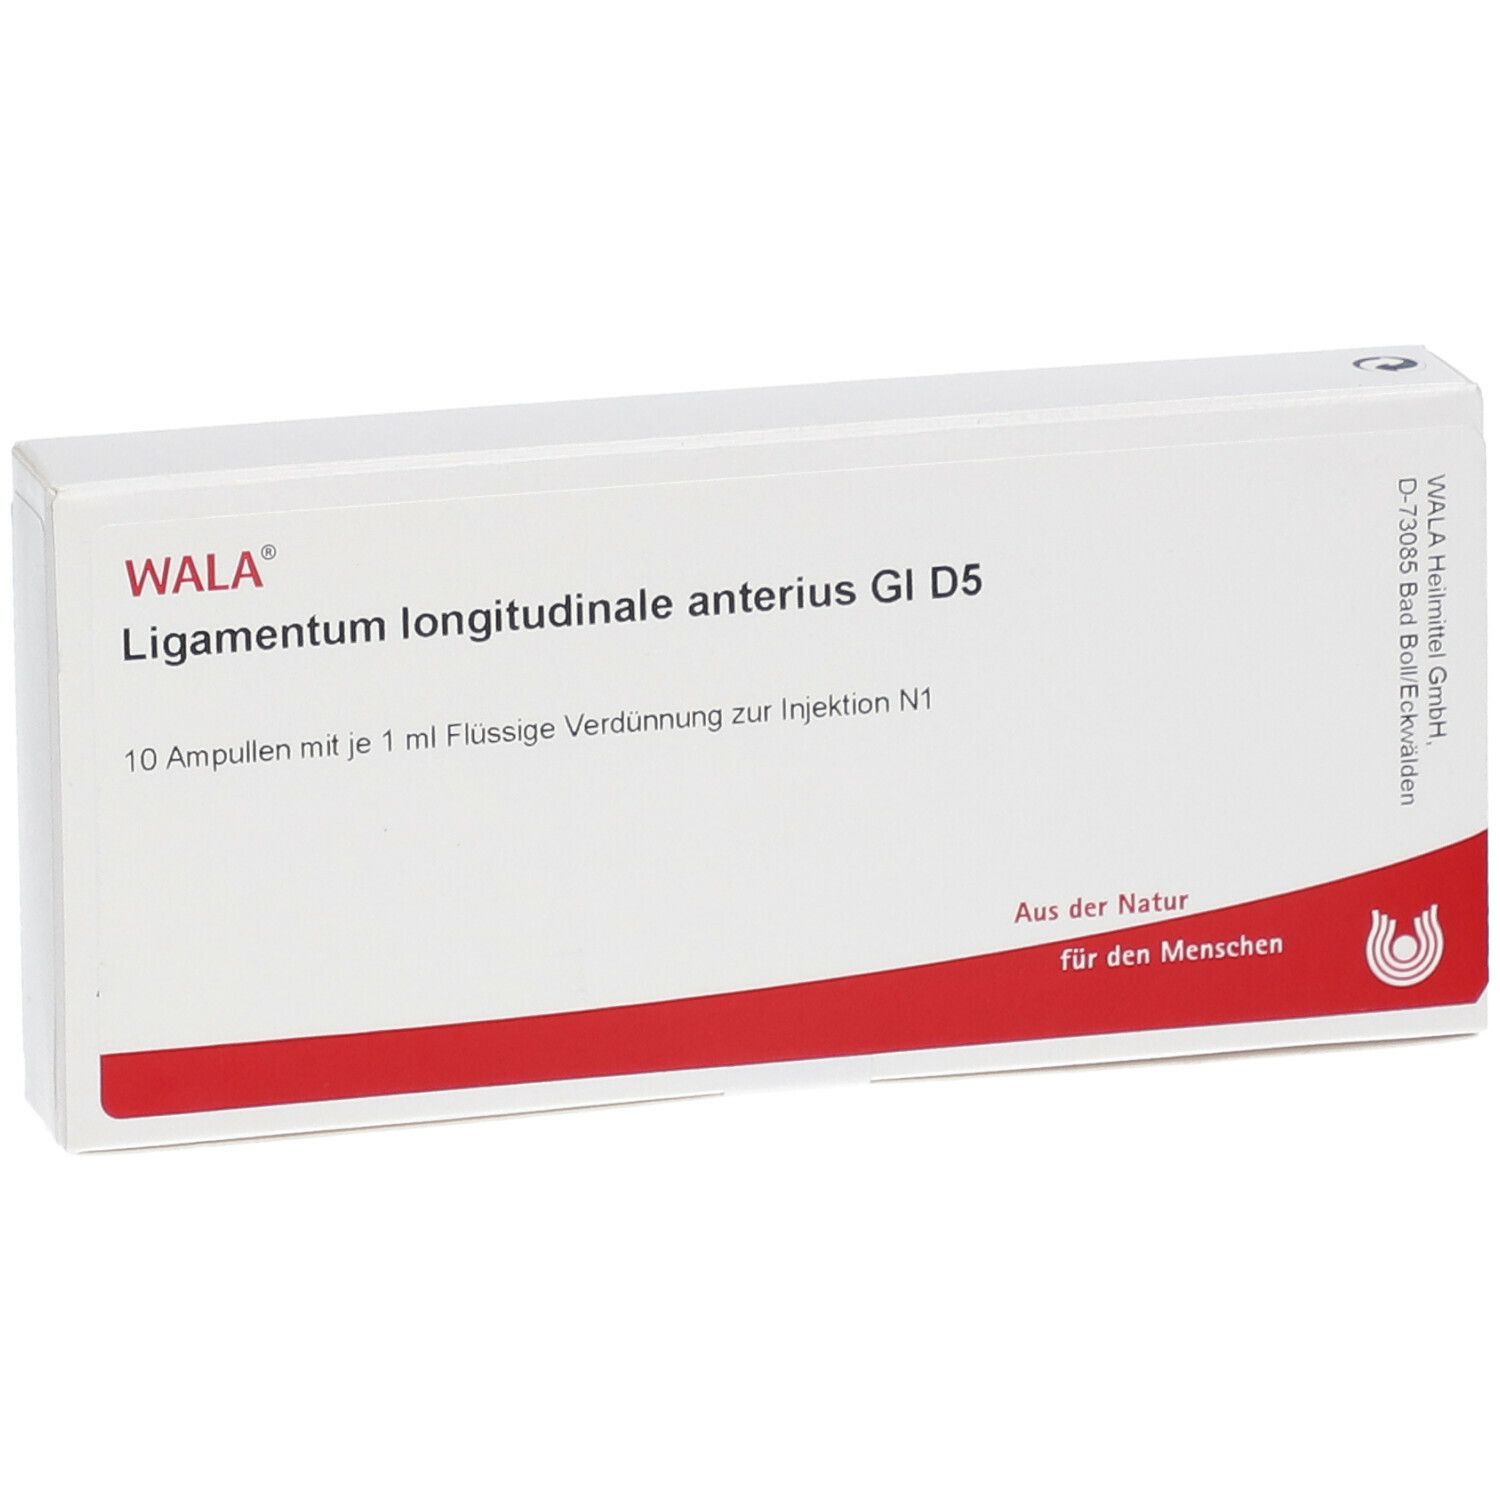 WALA® Ligamentum longitudinale anterius Gl D 5